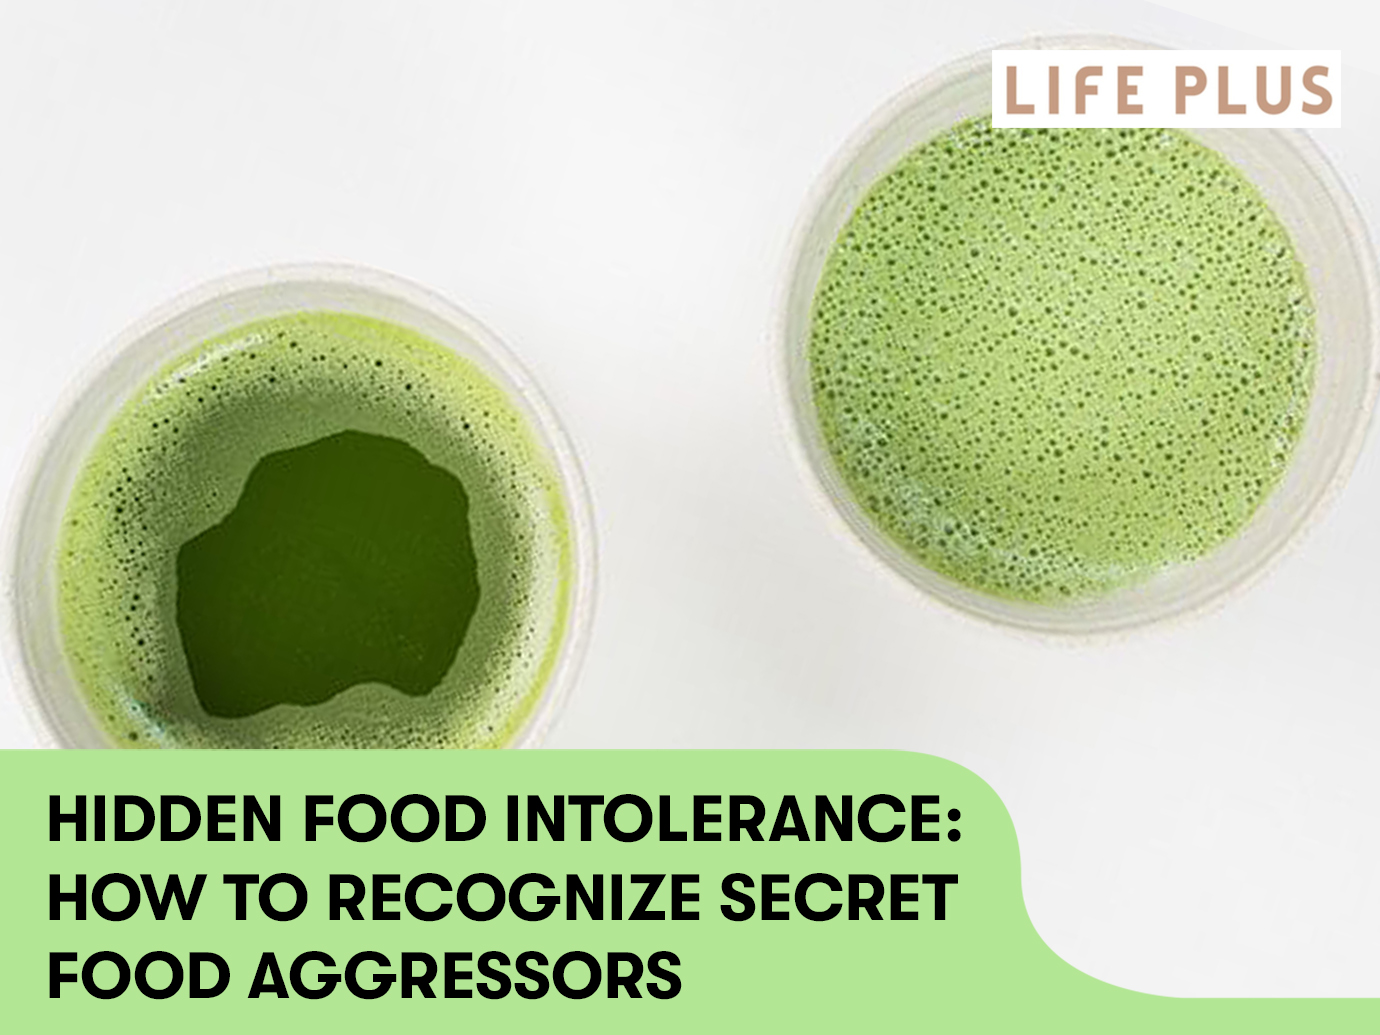 HIDDEN FOOD INTOLERANCE: how to recognize secret food aggressors